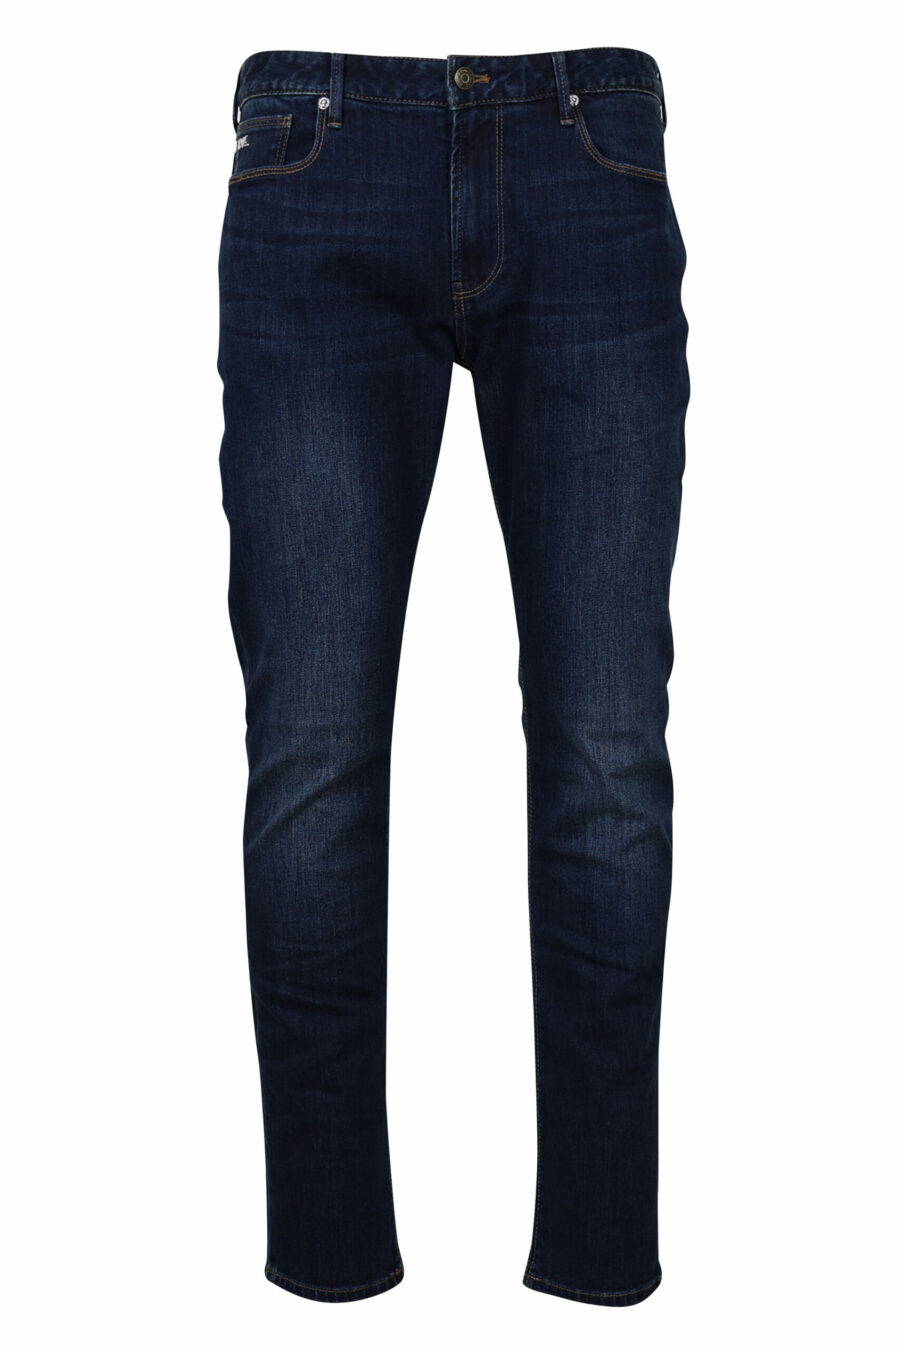 Dunkelblaue Jeans mit Metalladler-Logo - 8057767476106 skaliert